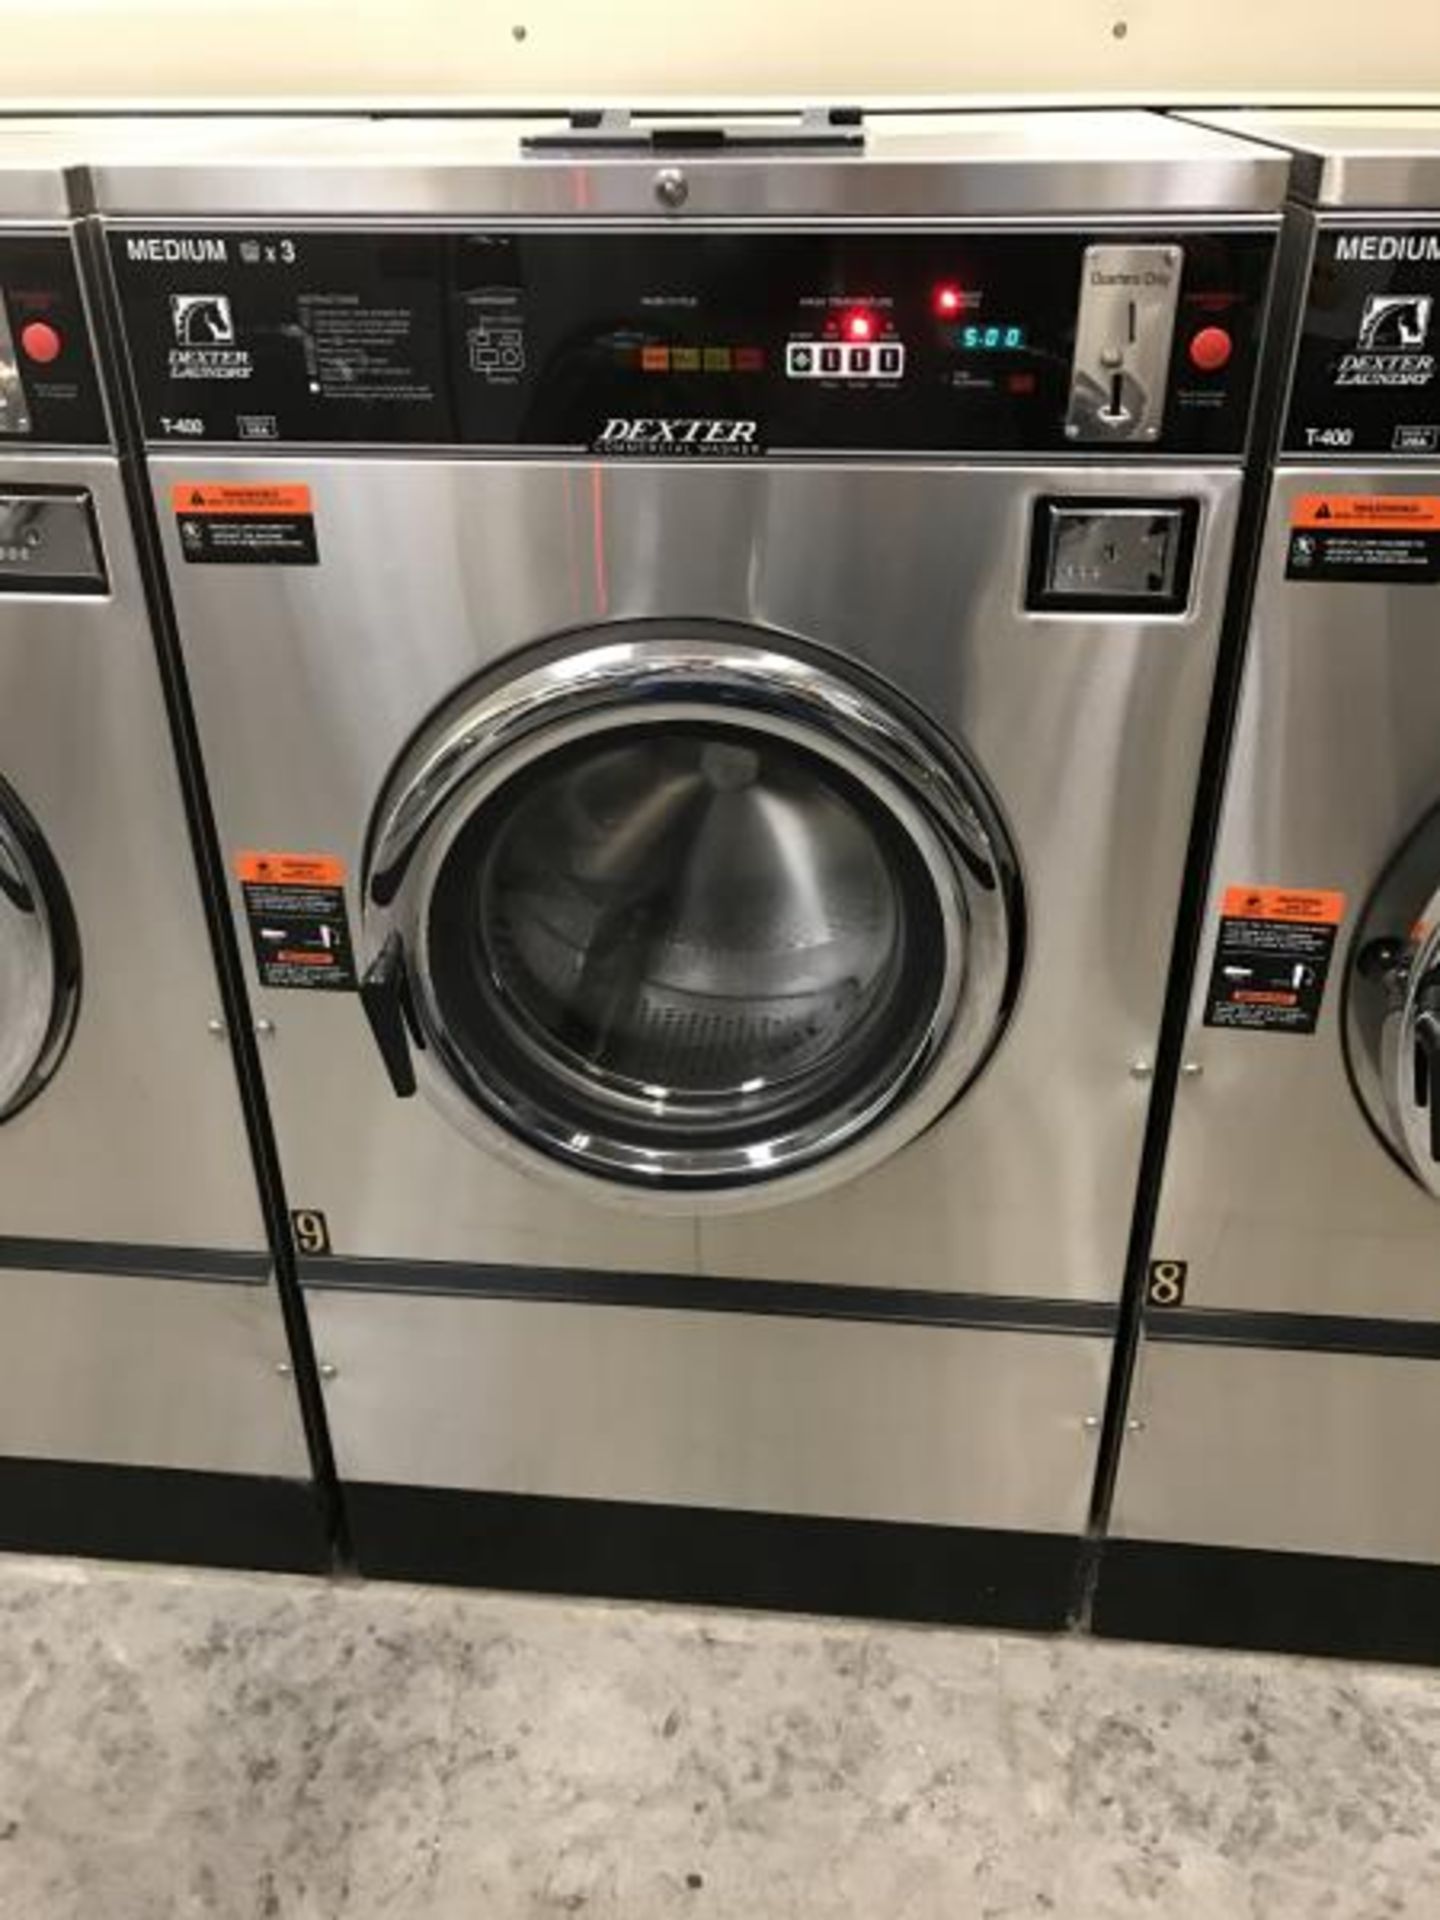 Dexter Commercial Washing Machine, Medium x 3, 30 Lbs., Model: T-400 / WCAD30KCX-12CN, SN: 531771